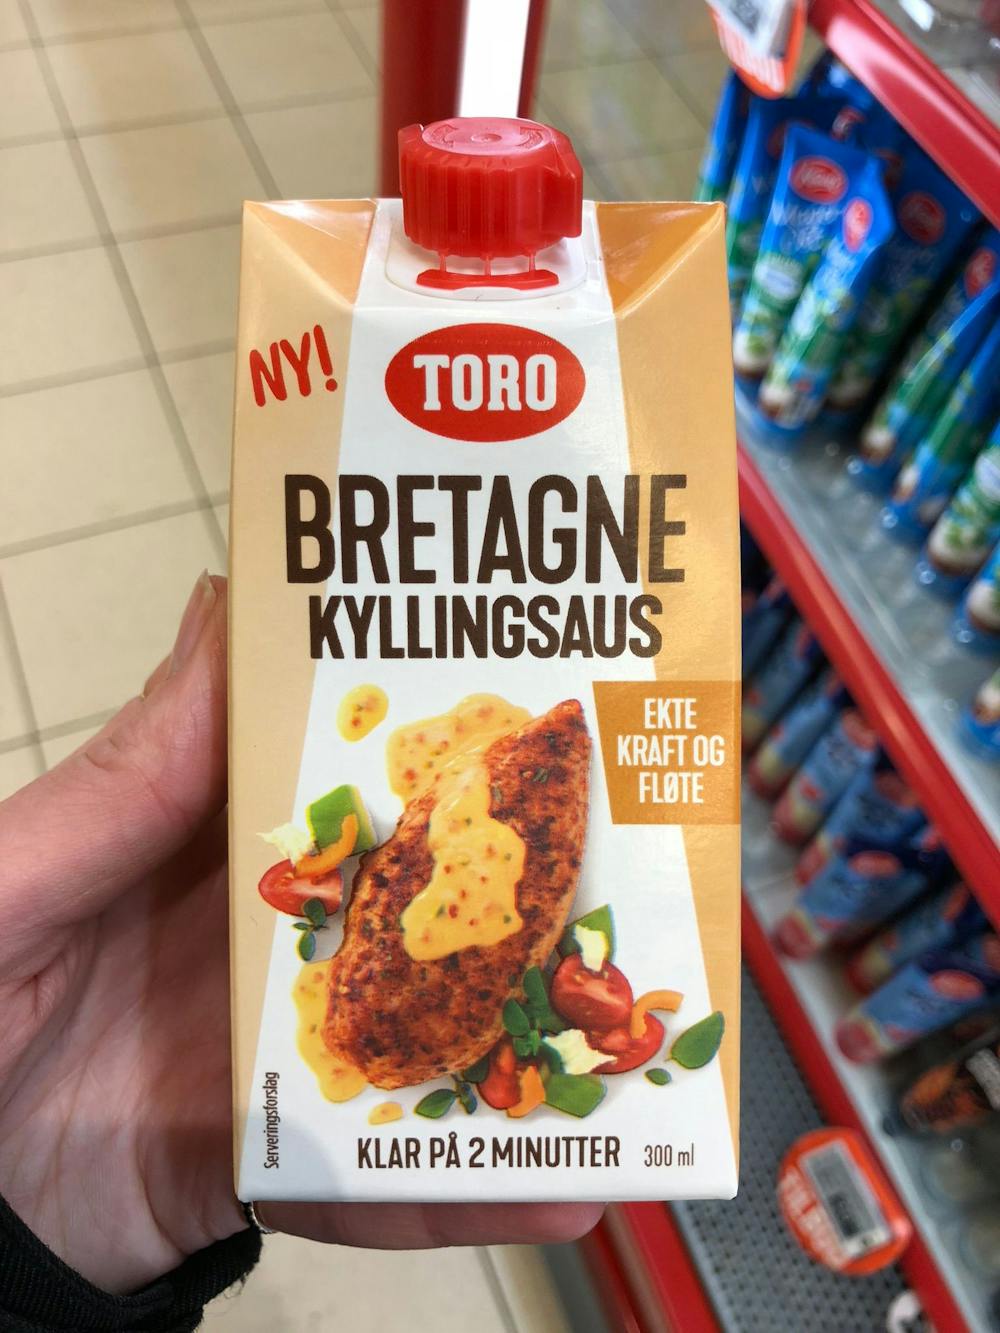 Bretagne kyllingsaus, Toro